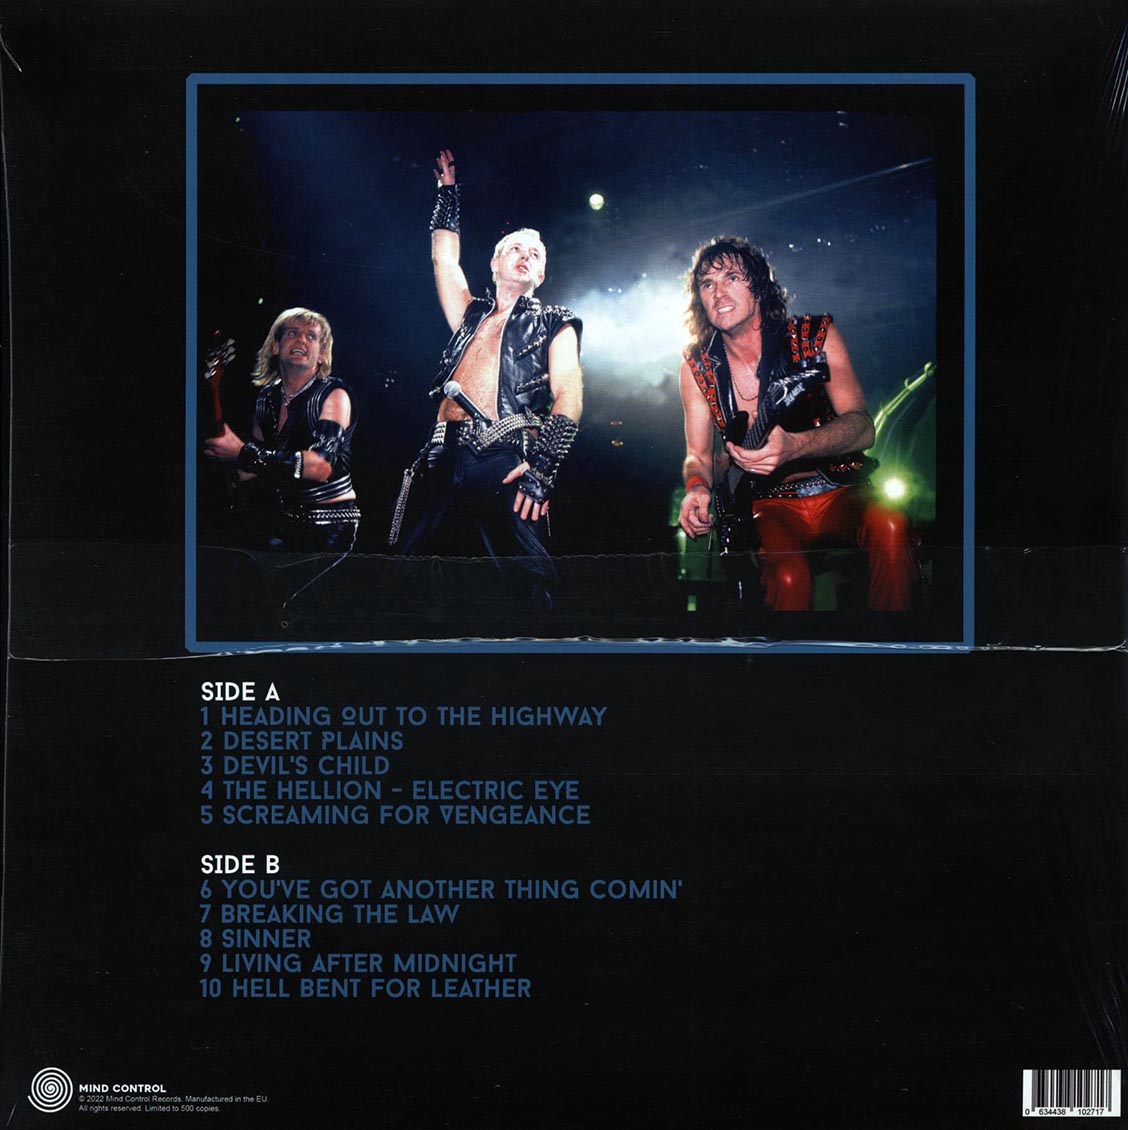 Judas Priest - Heading Out To Houston: Live At Convention Center, Texas, June 8, 1983 FM Broadcast - Vinyl LP, LP